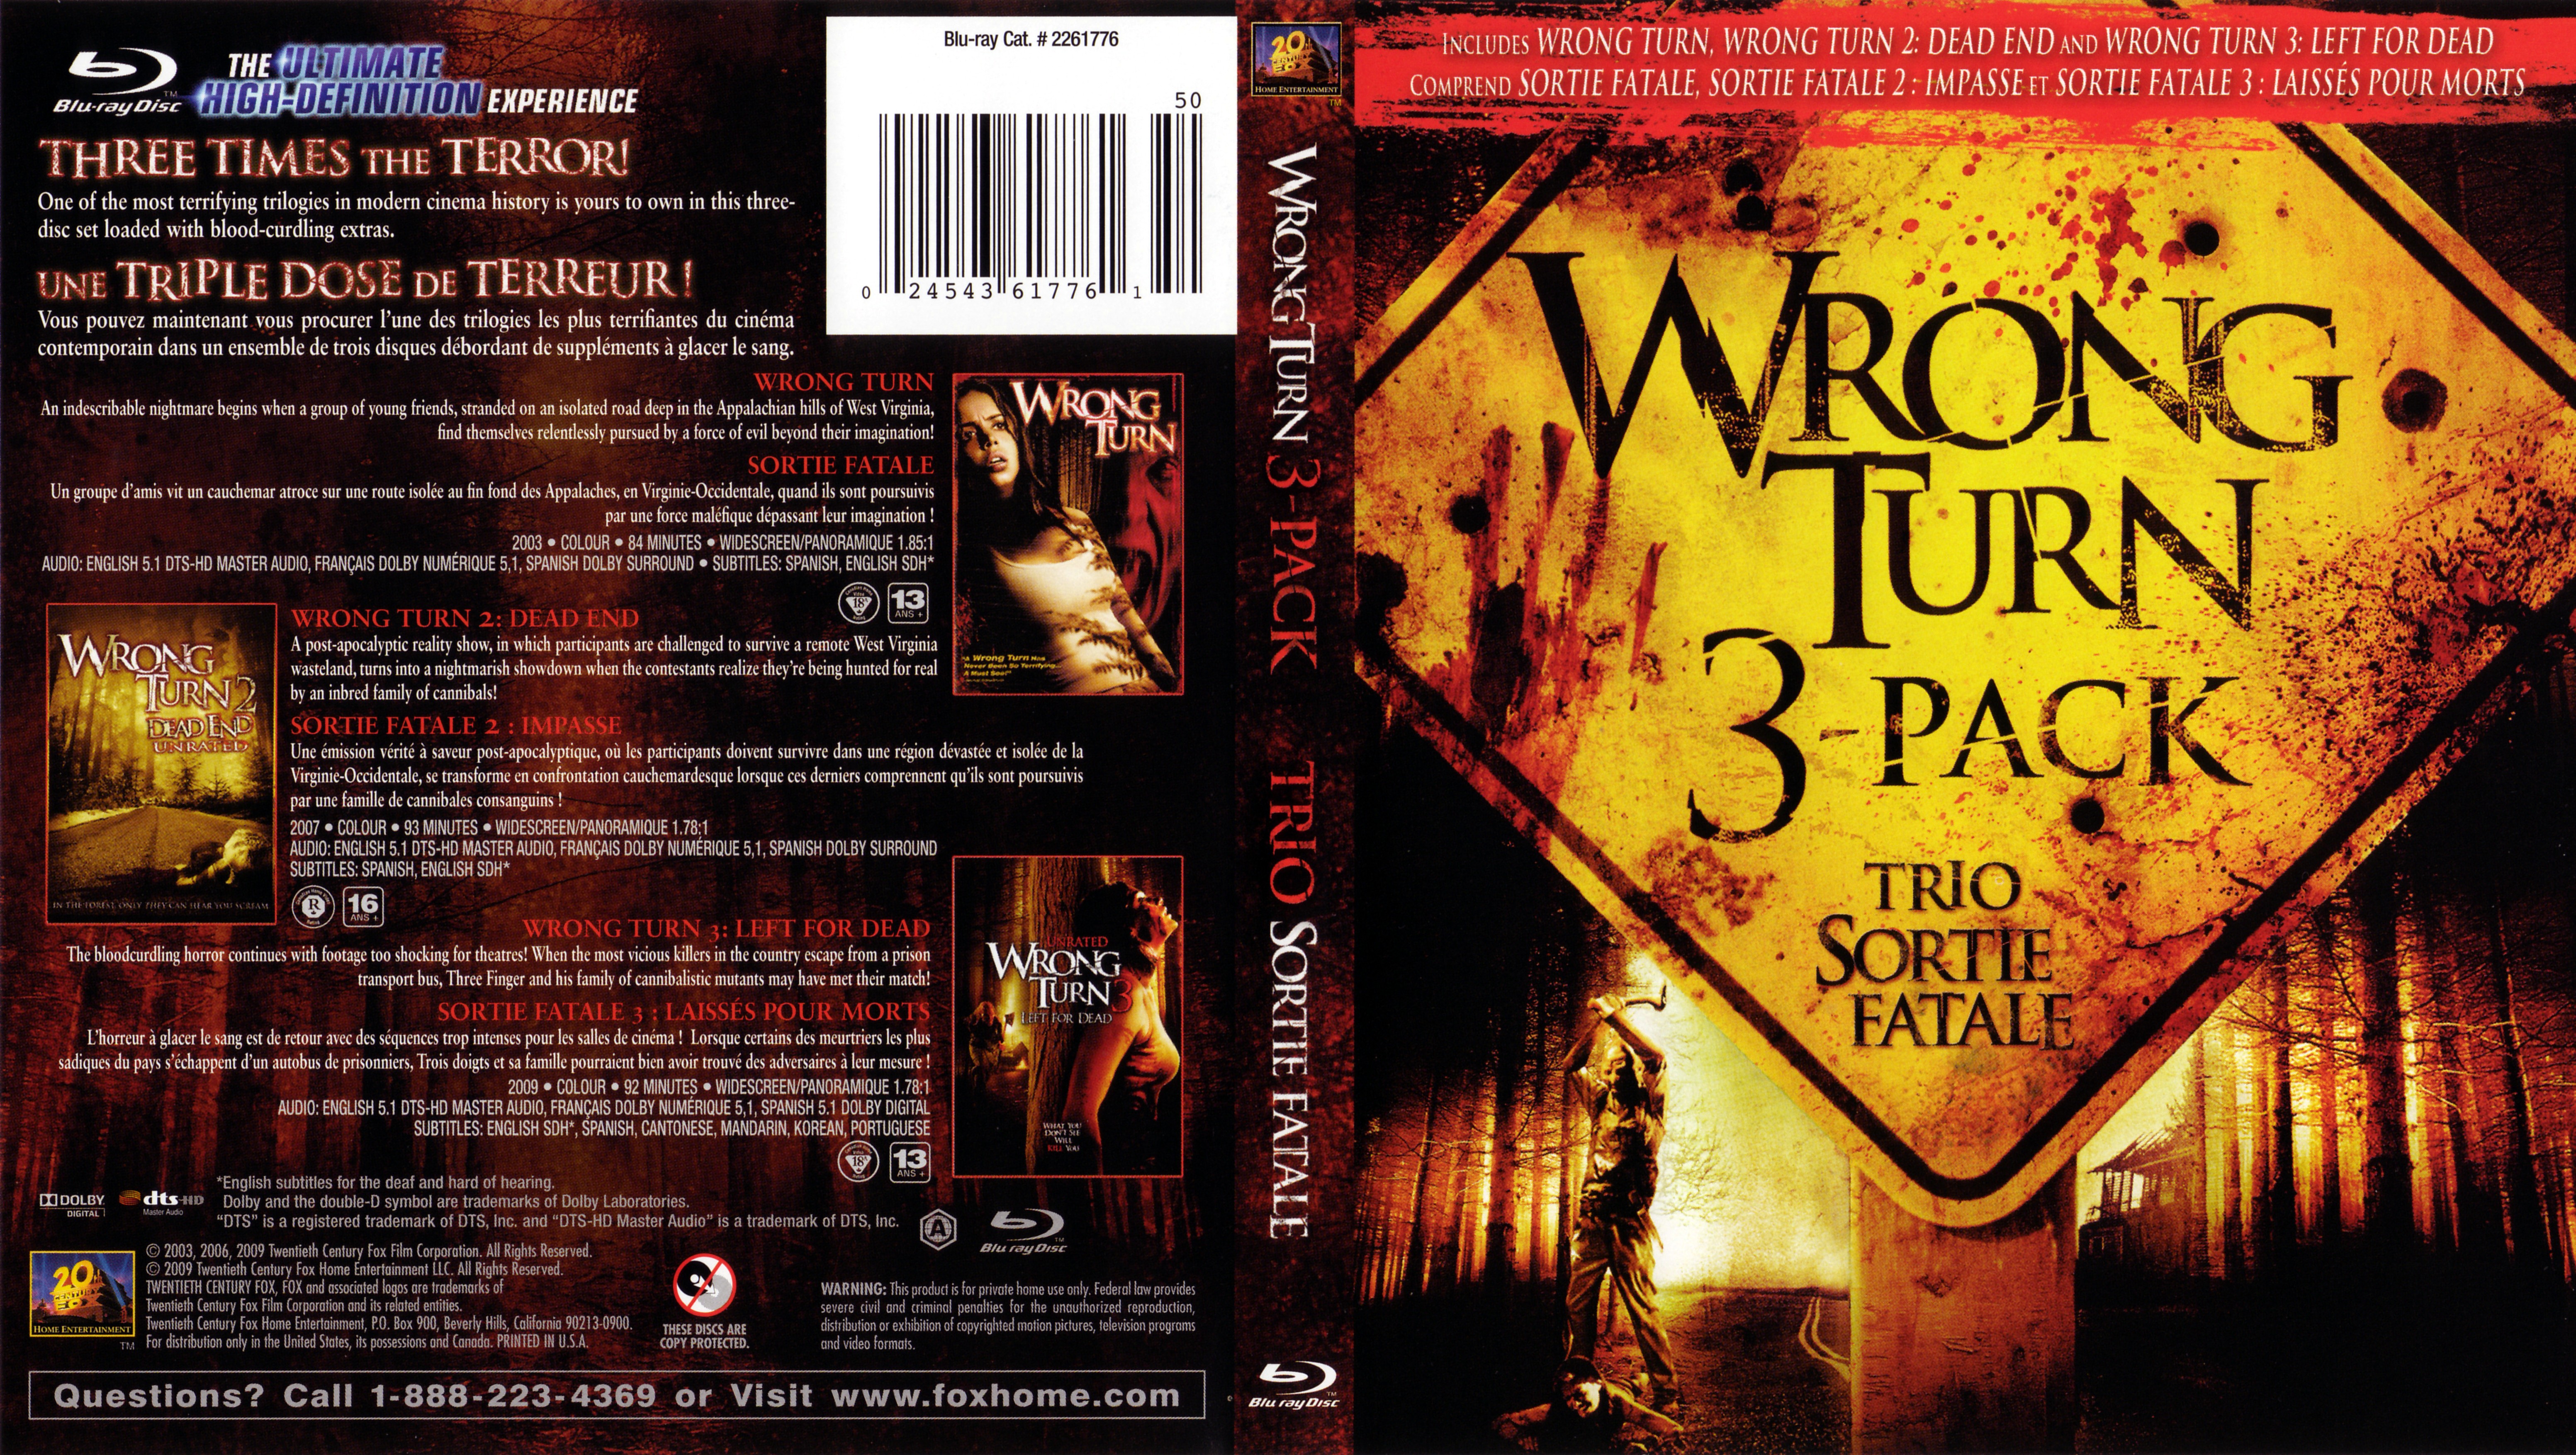 Jaquette DVD Wrong Turn Trilogy - Sortie Fatale trilogie (Canadienne) (BLU-RAY)